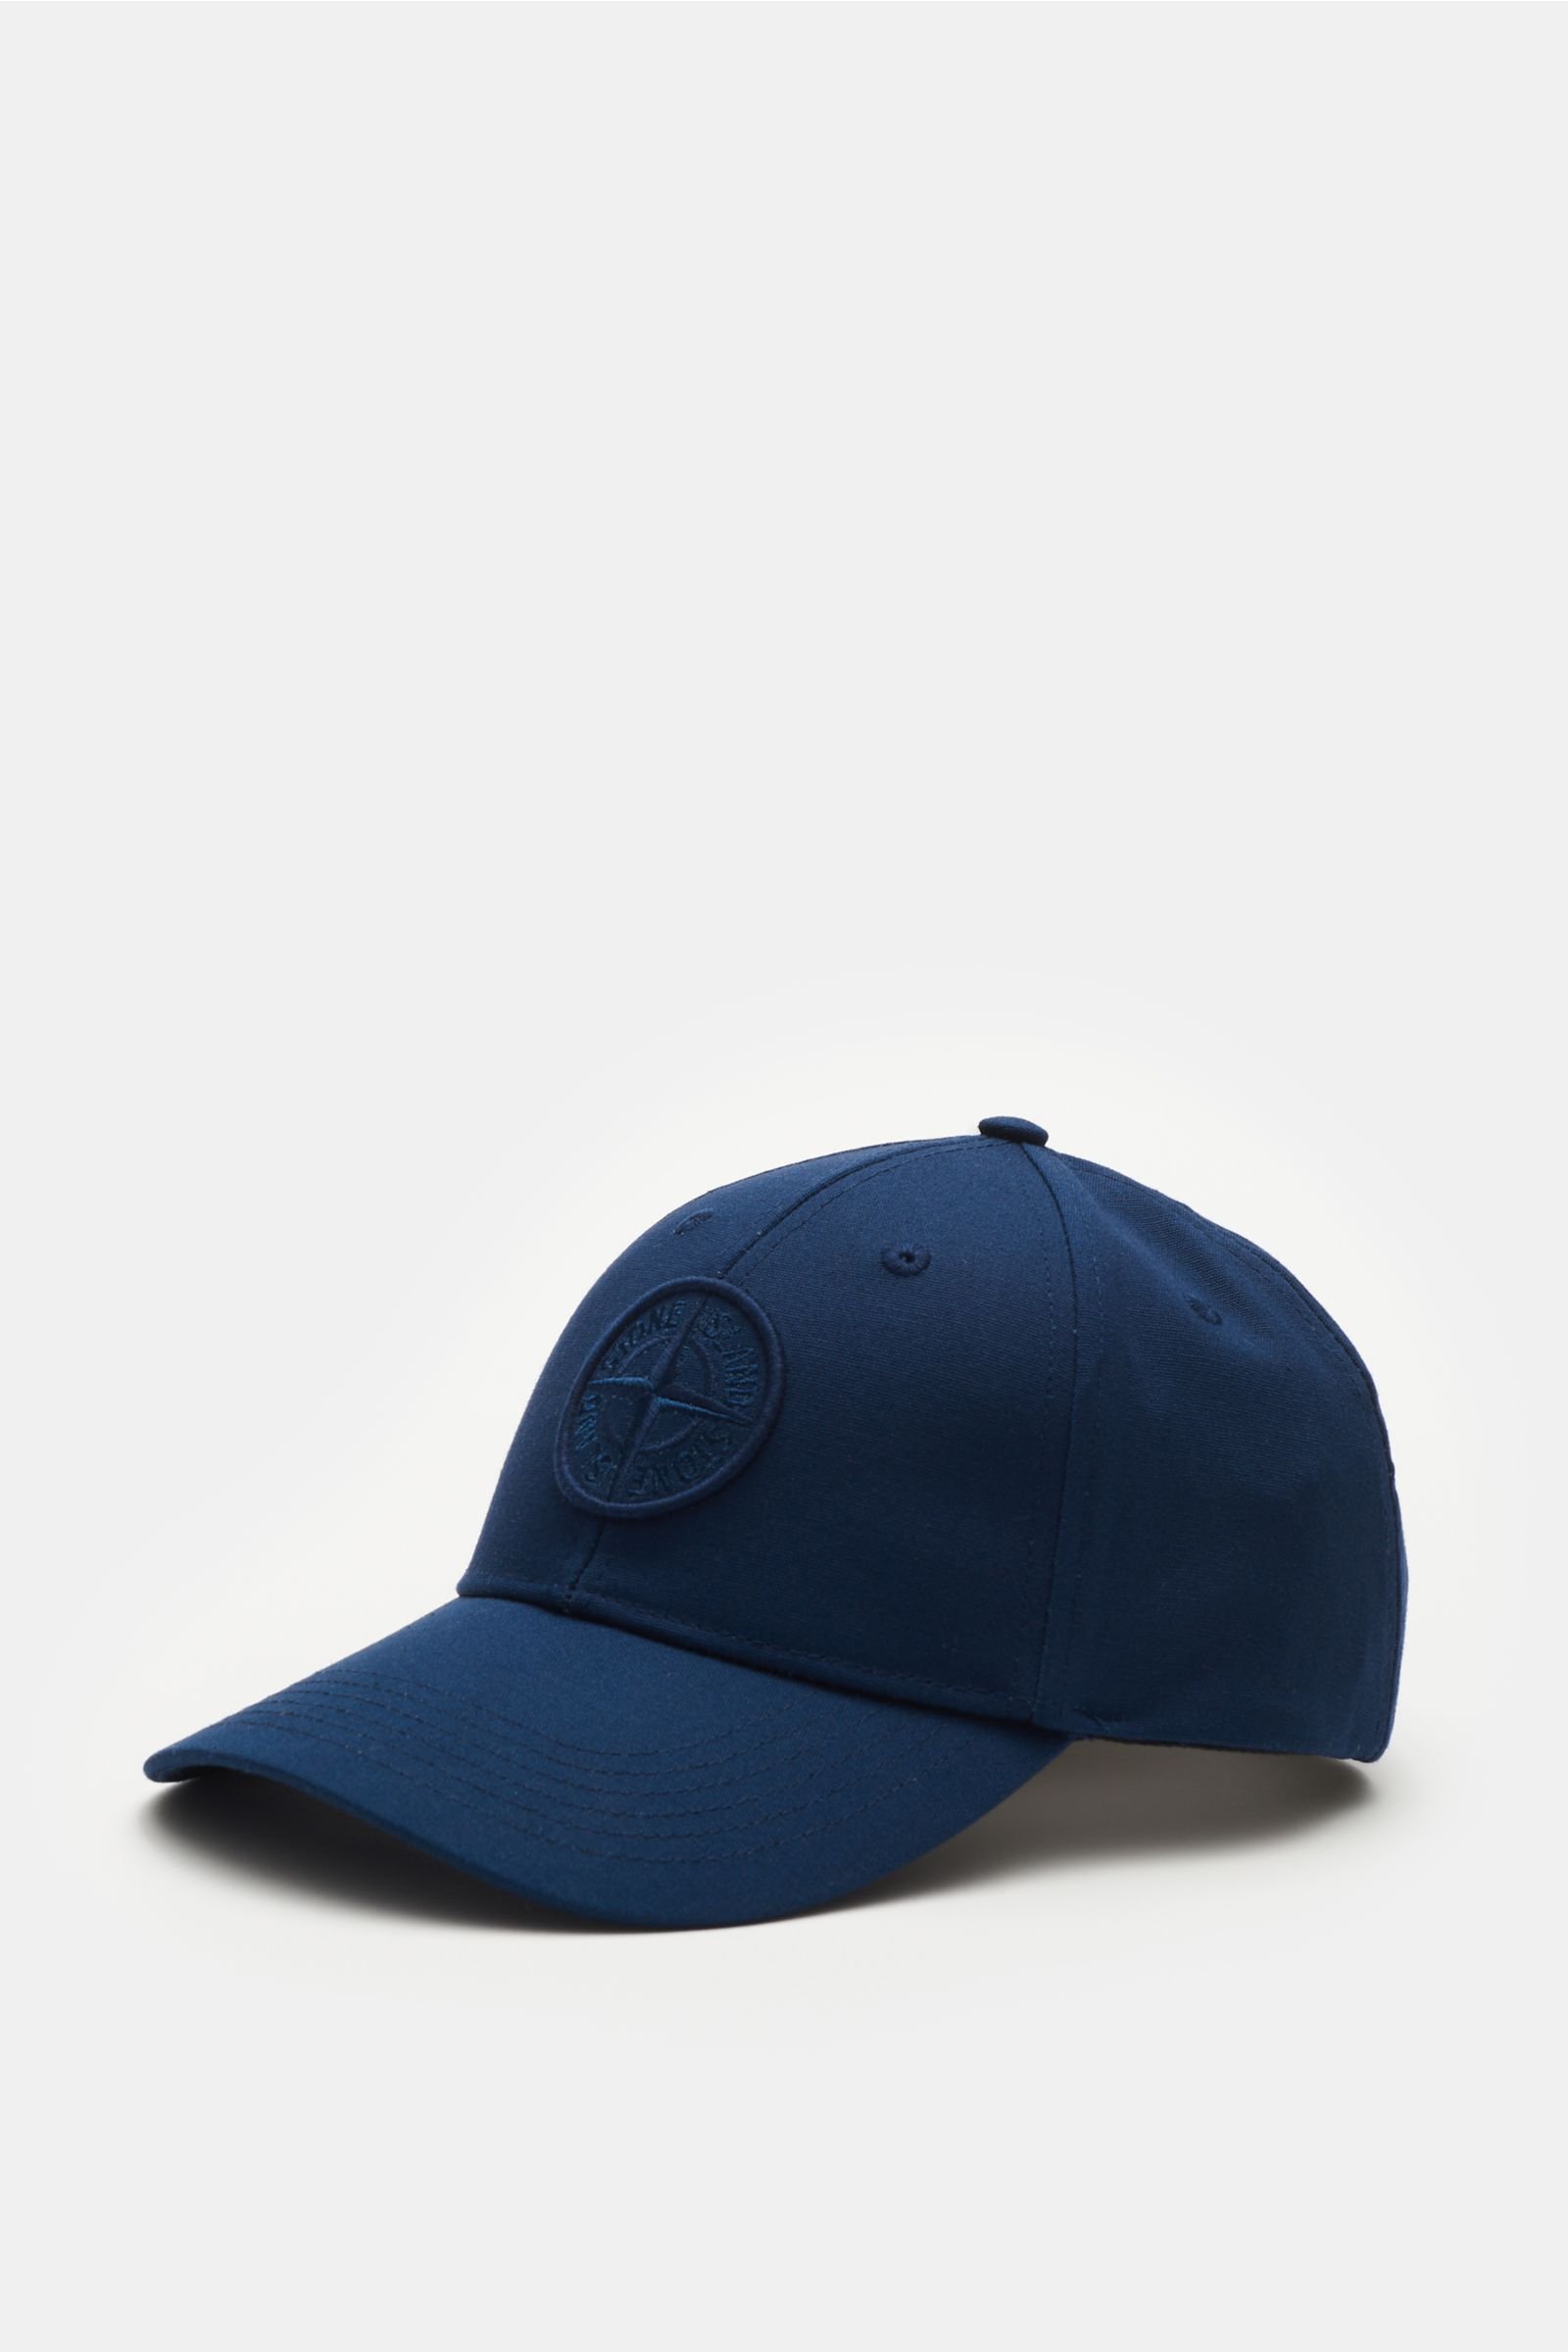 Baseball cap dark blue